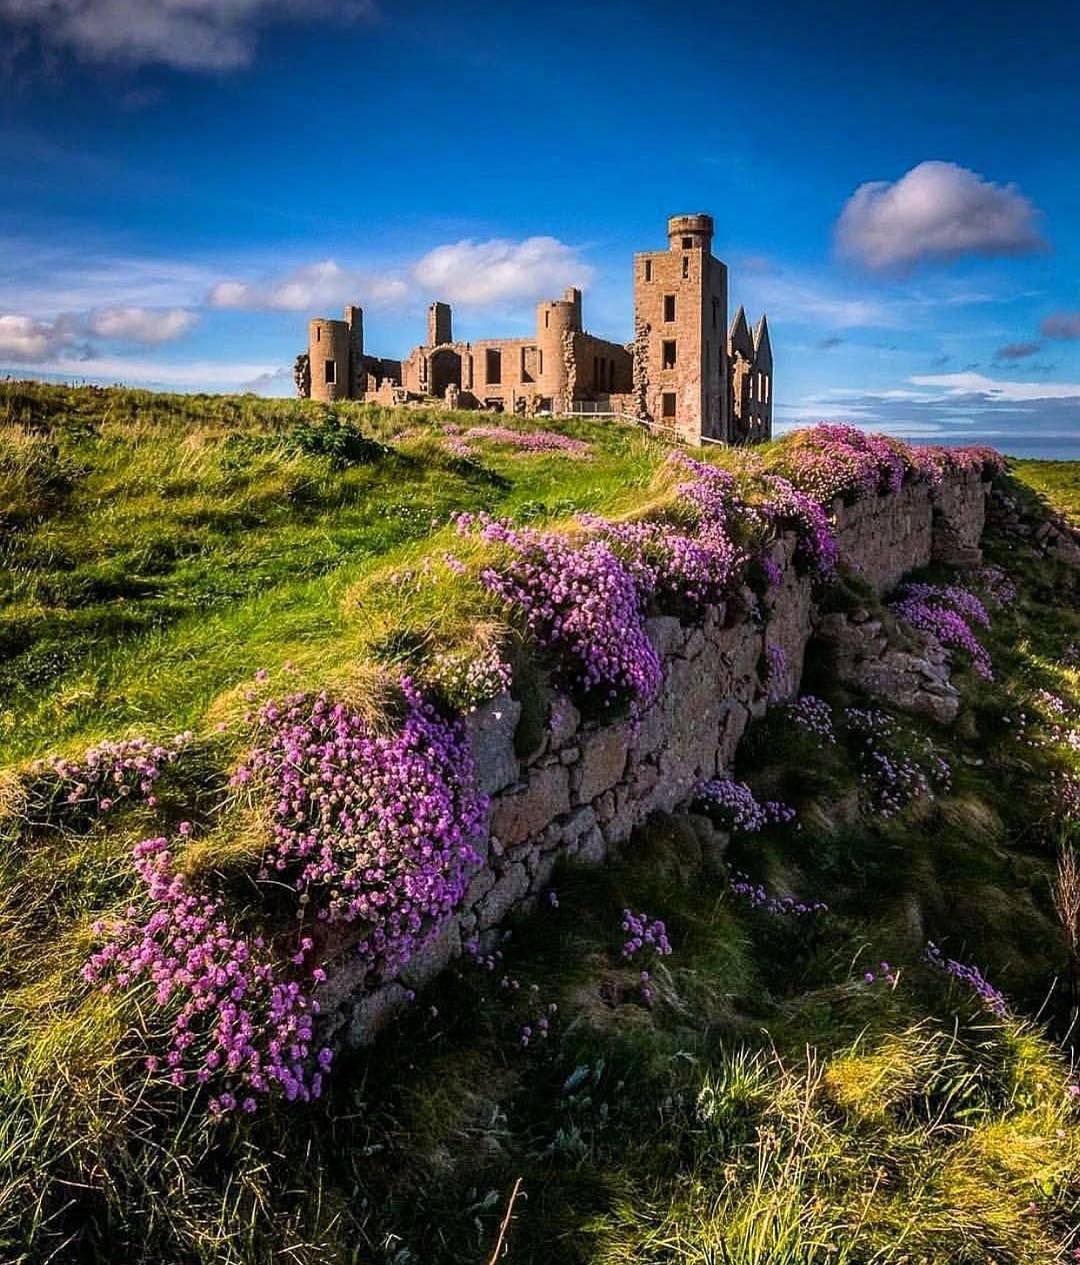 Scotland is beautiful. Страткрой Шотландия. Замок Данноттар, Шотландия, Великобритания. Замок Килренен,Шотландия. Замки Шотландии и Ирландии.